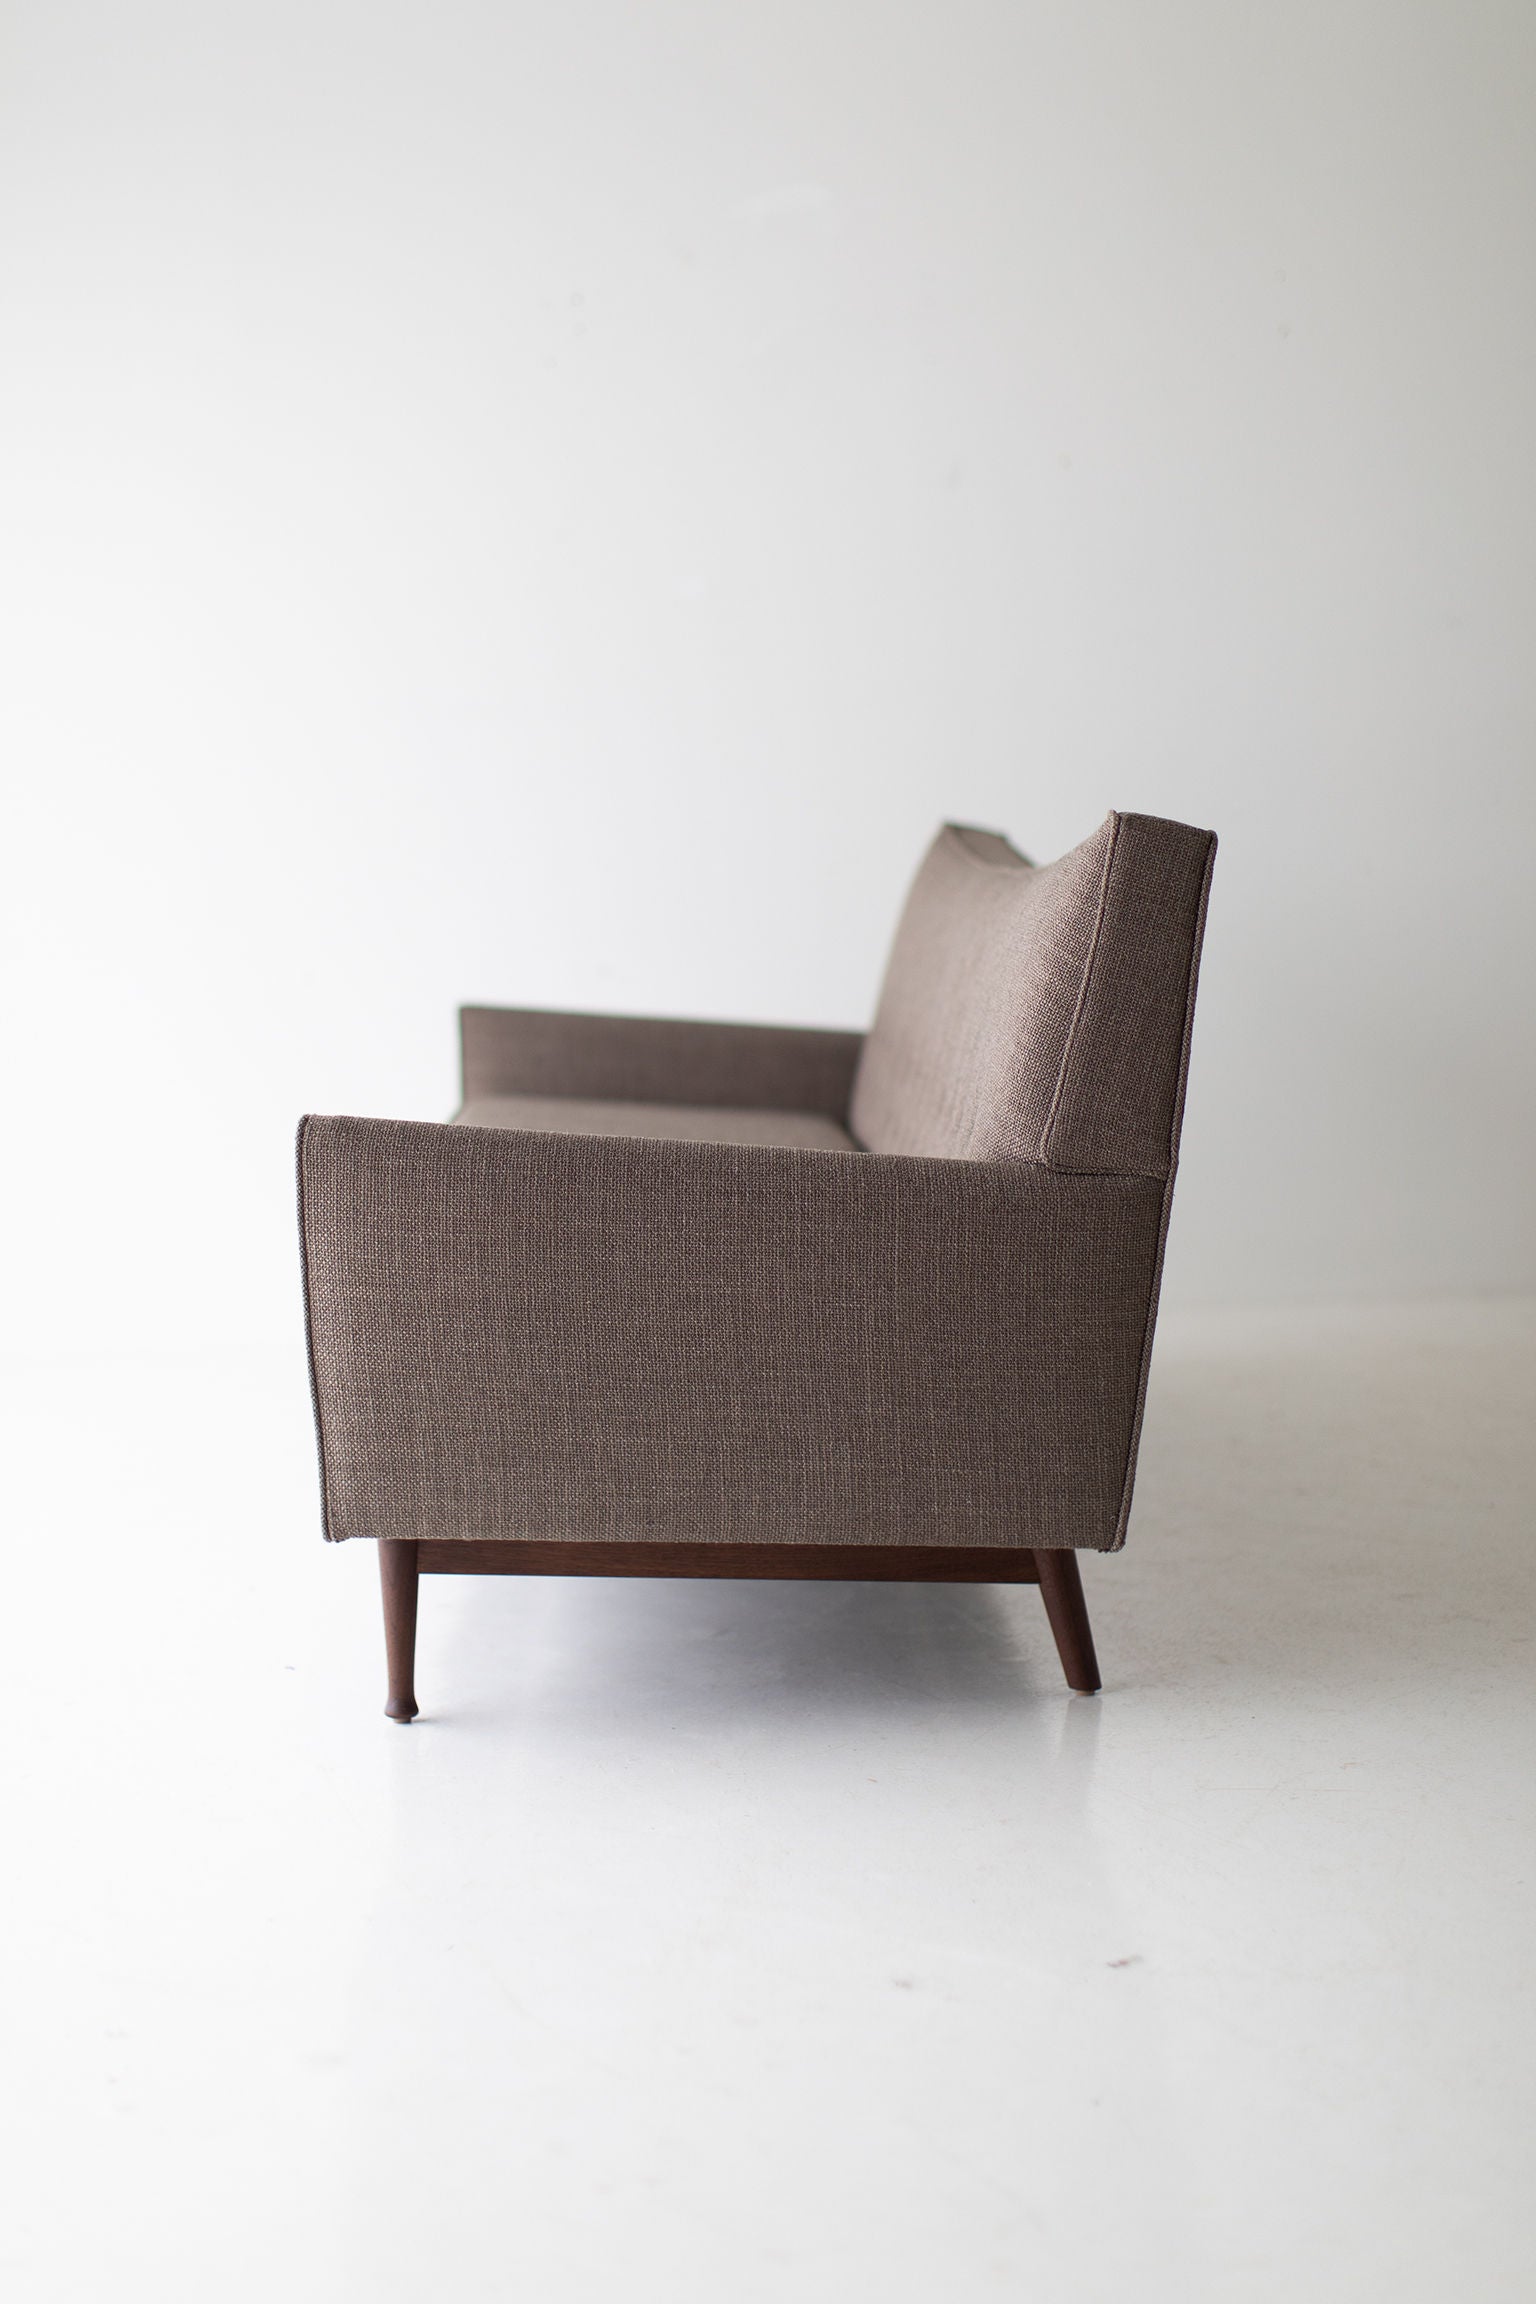 Lawrence Peabody Modern Sofa For Craft Associates Furniture - 1908P